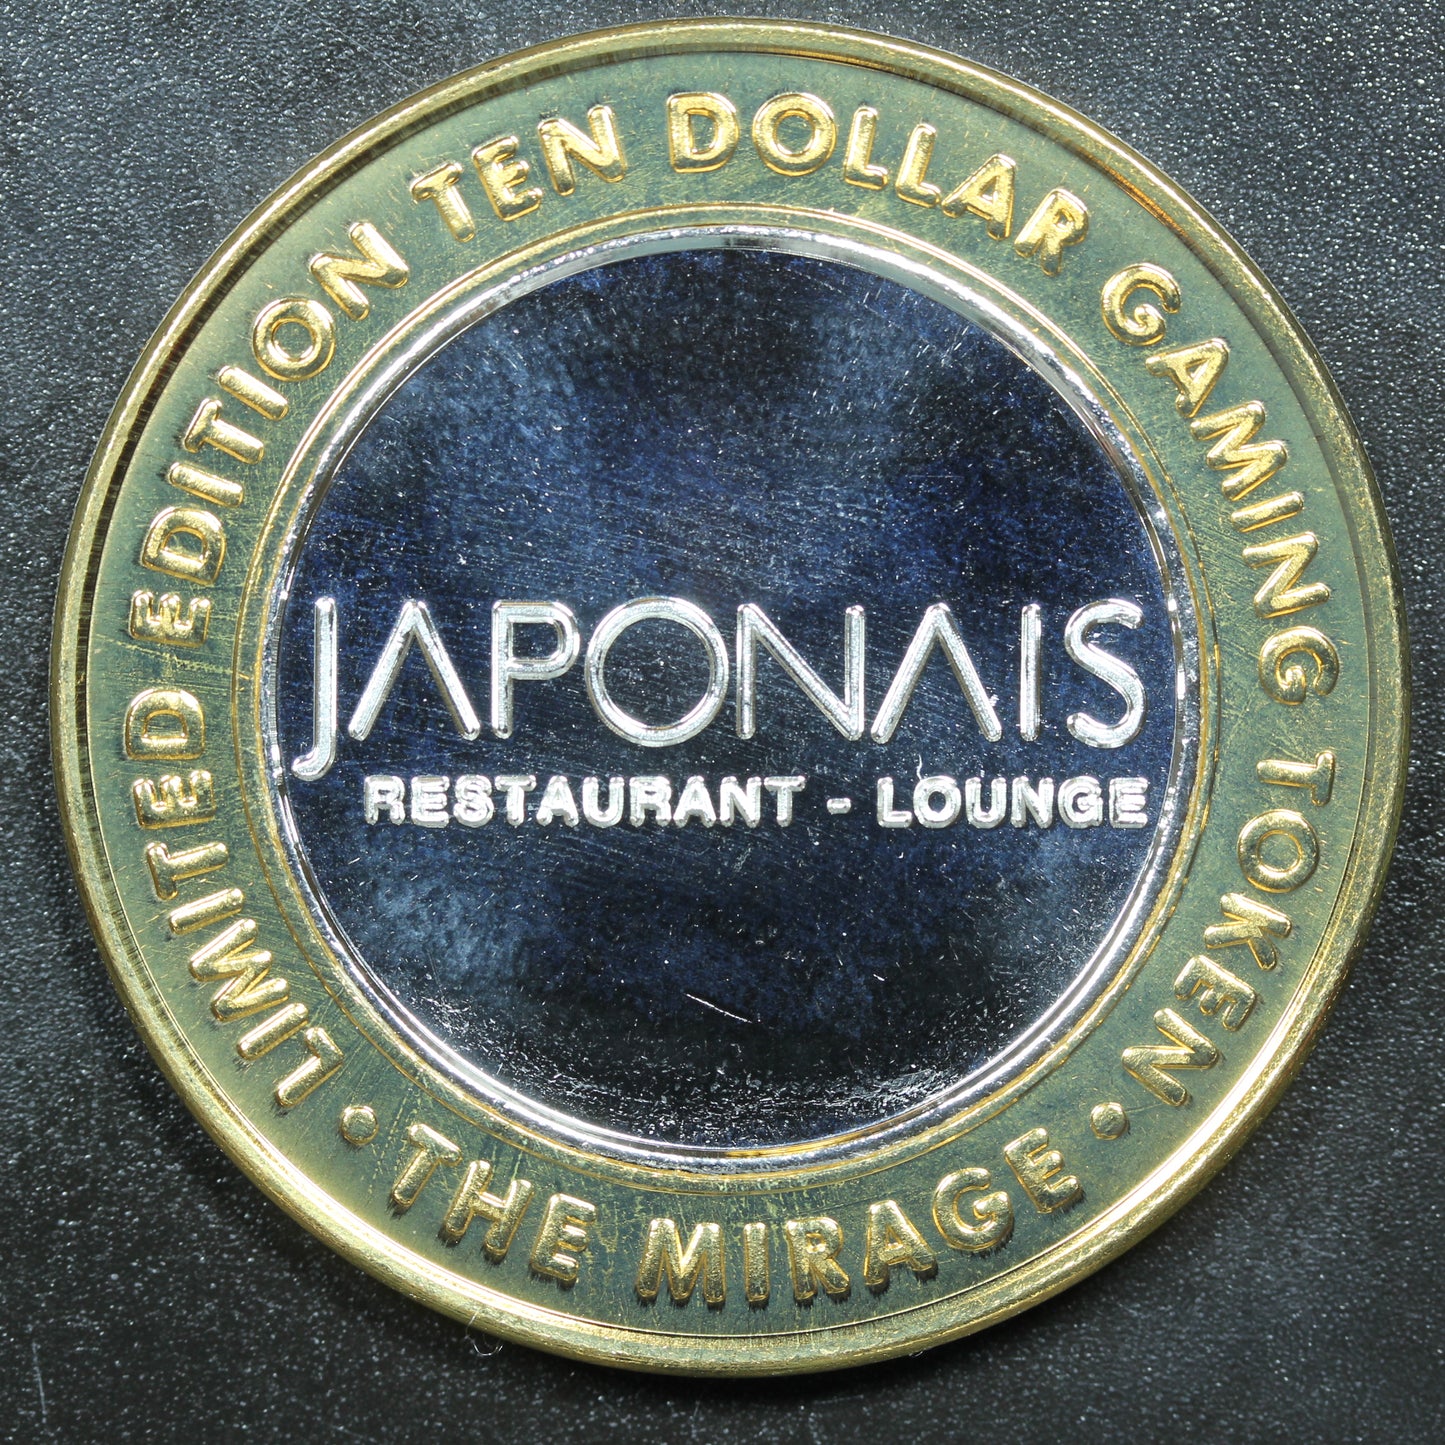 Mirage Las Vegas $10 Ten Dollar Gaming Token .999 Fine Silver - Japonais Restaurant